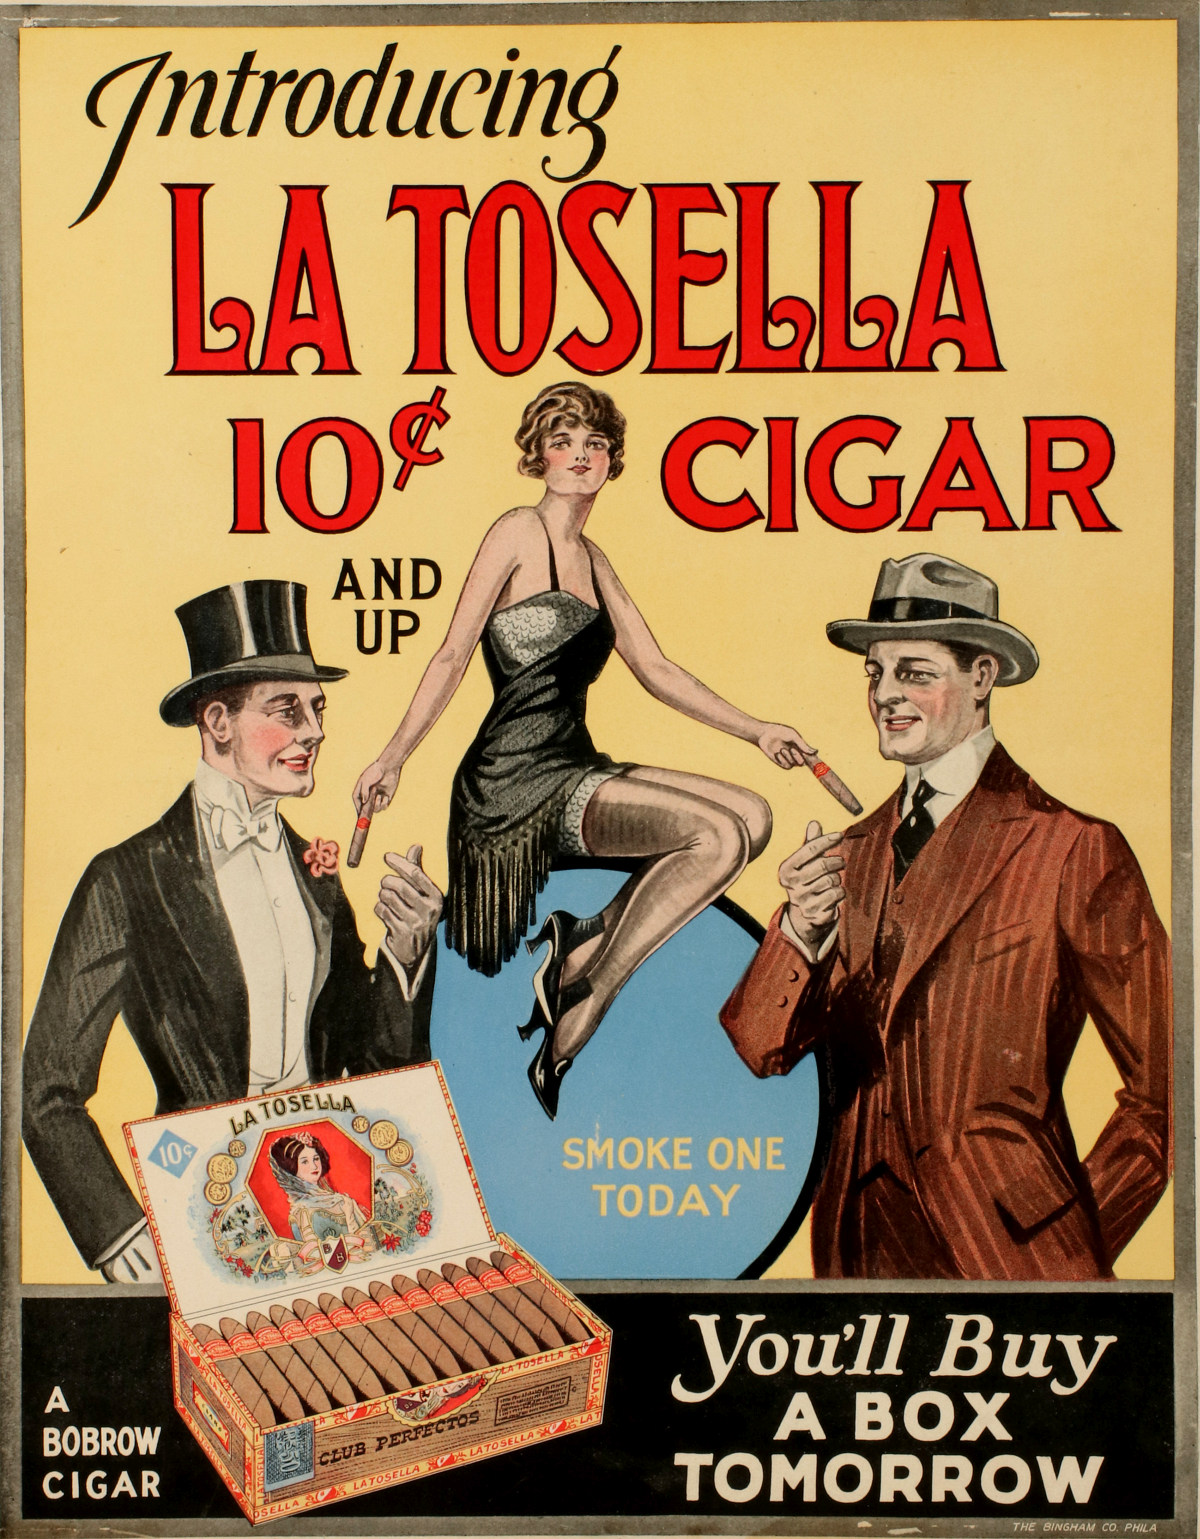 LA TOSELLA CIGARS ADVERTISING POSTER CIRCA 1920s